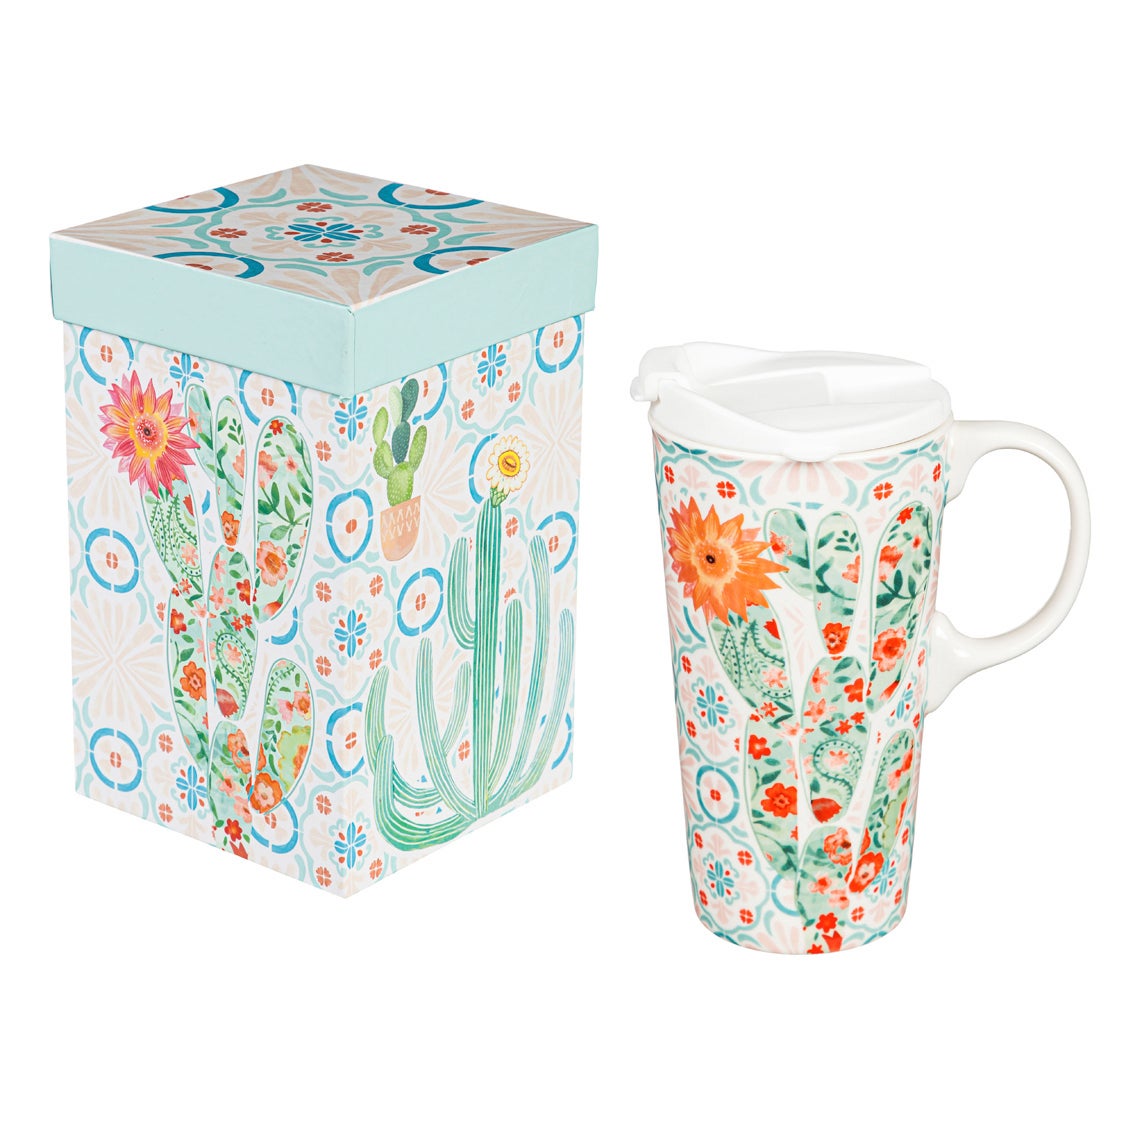 Desert Cacti Floral Ceramic Travel Cup Gift Set, 17 oz.